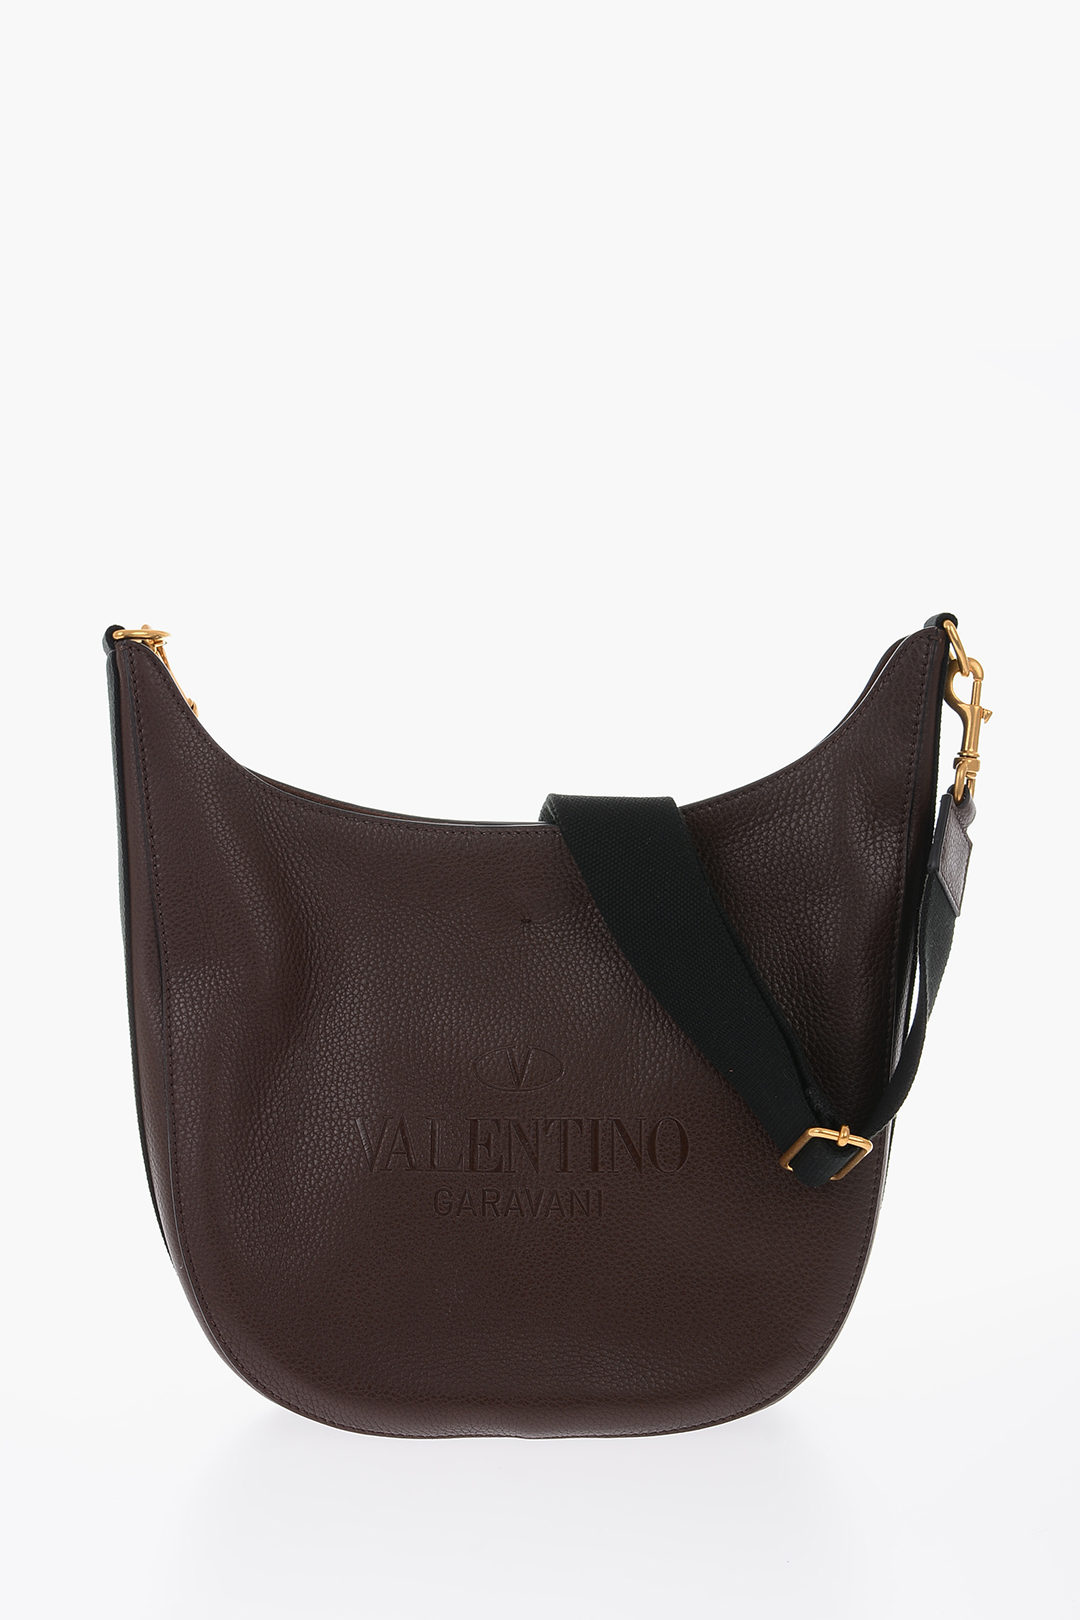 Valentino Garavani Women Hobo Vlntn' Bag 